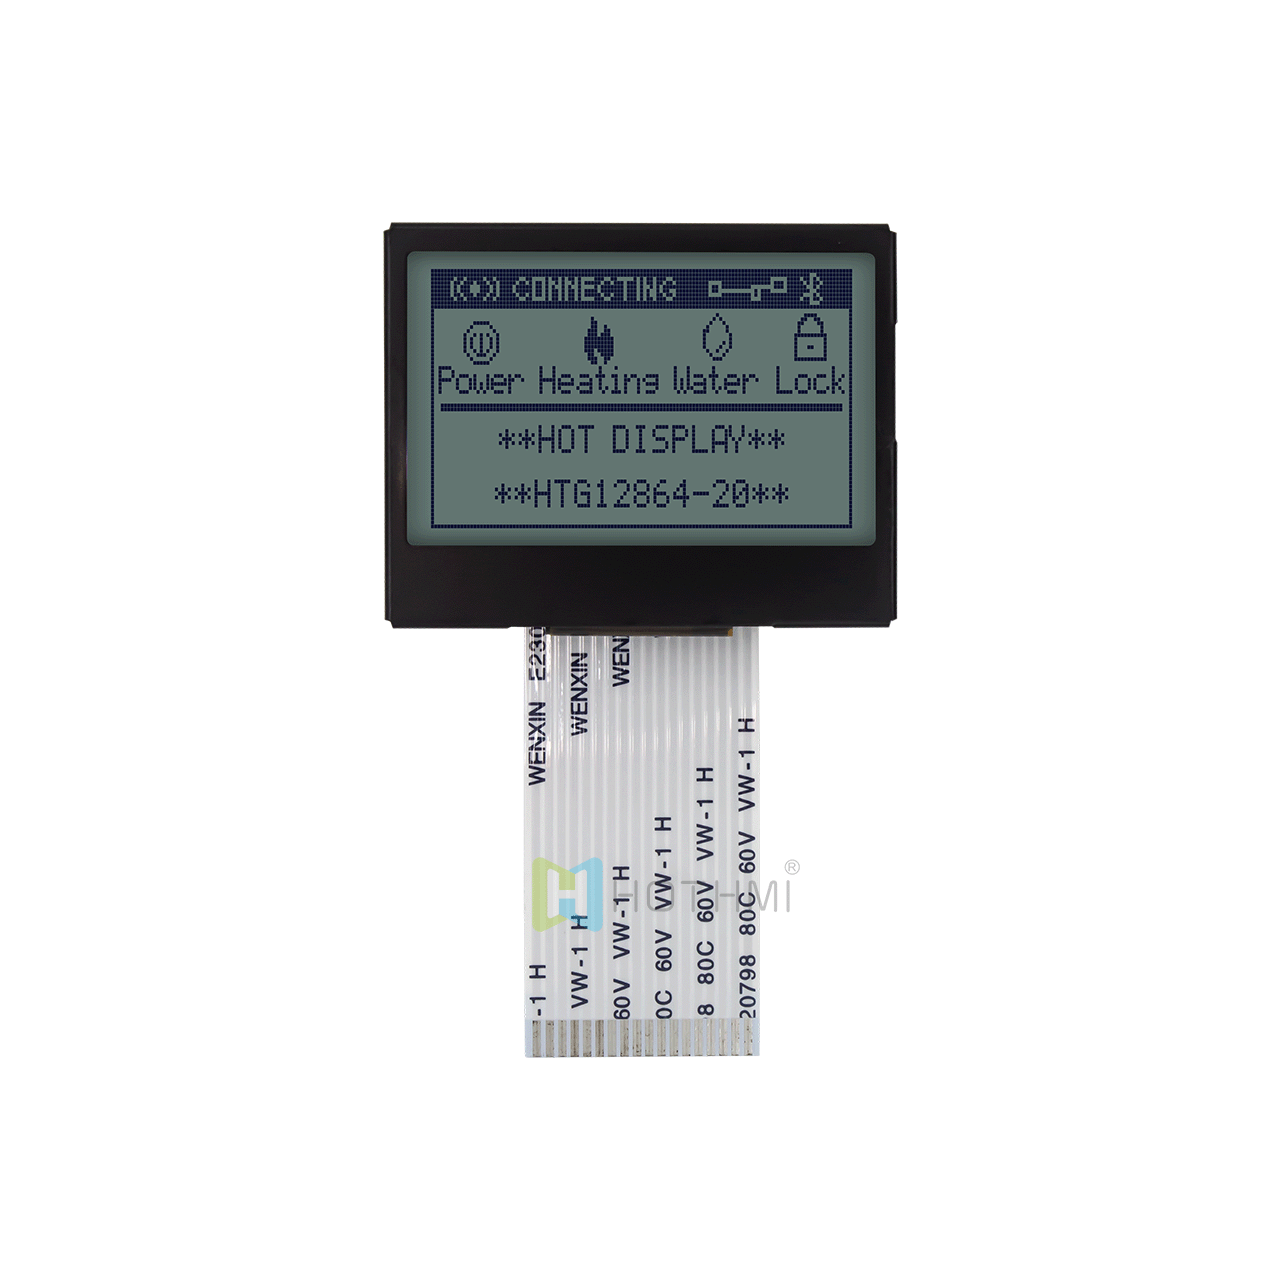 1.7-inch LCD128 x 64 industrial control graphic LCD screen/LCM128x64 graphic dot matrix LCD module/Adruino